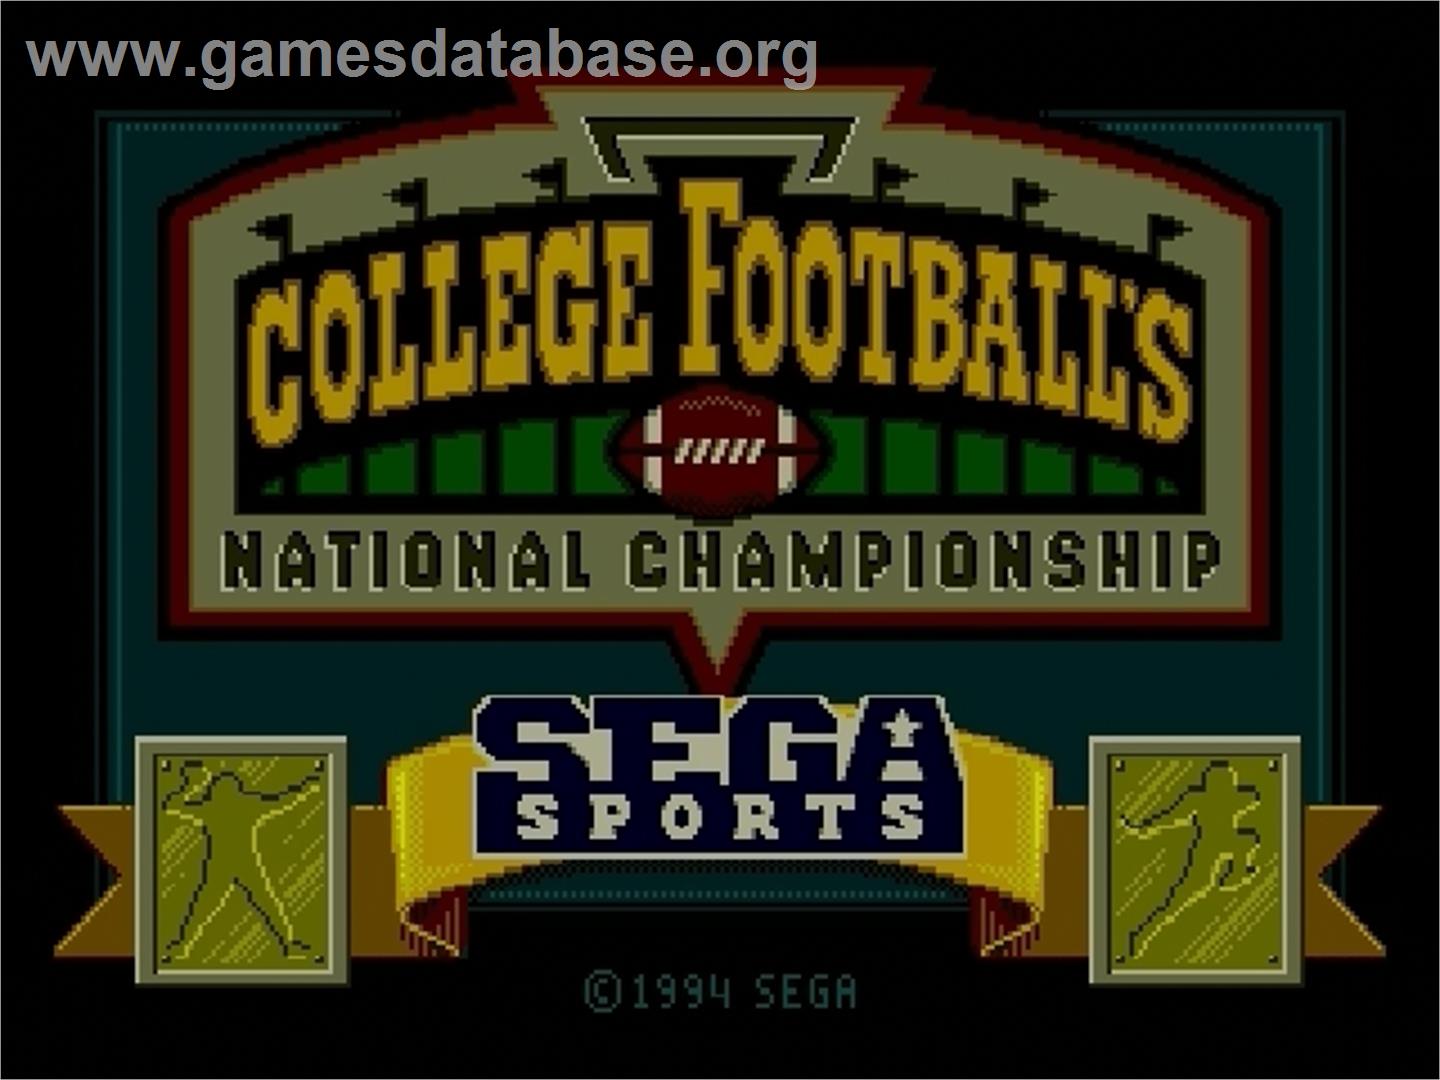 College Football's National Championship - Sega Genesis - Artwork - Title Screen